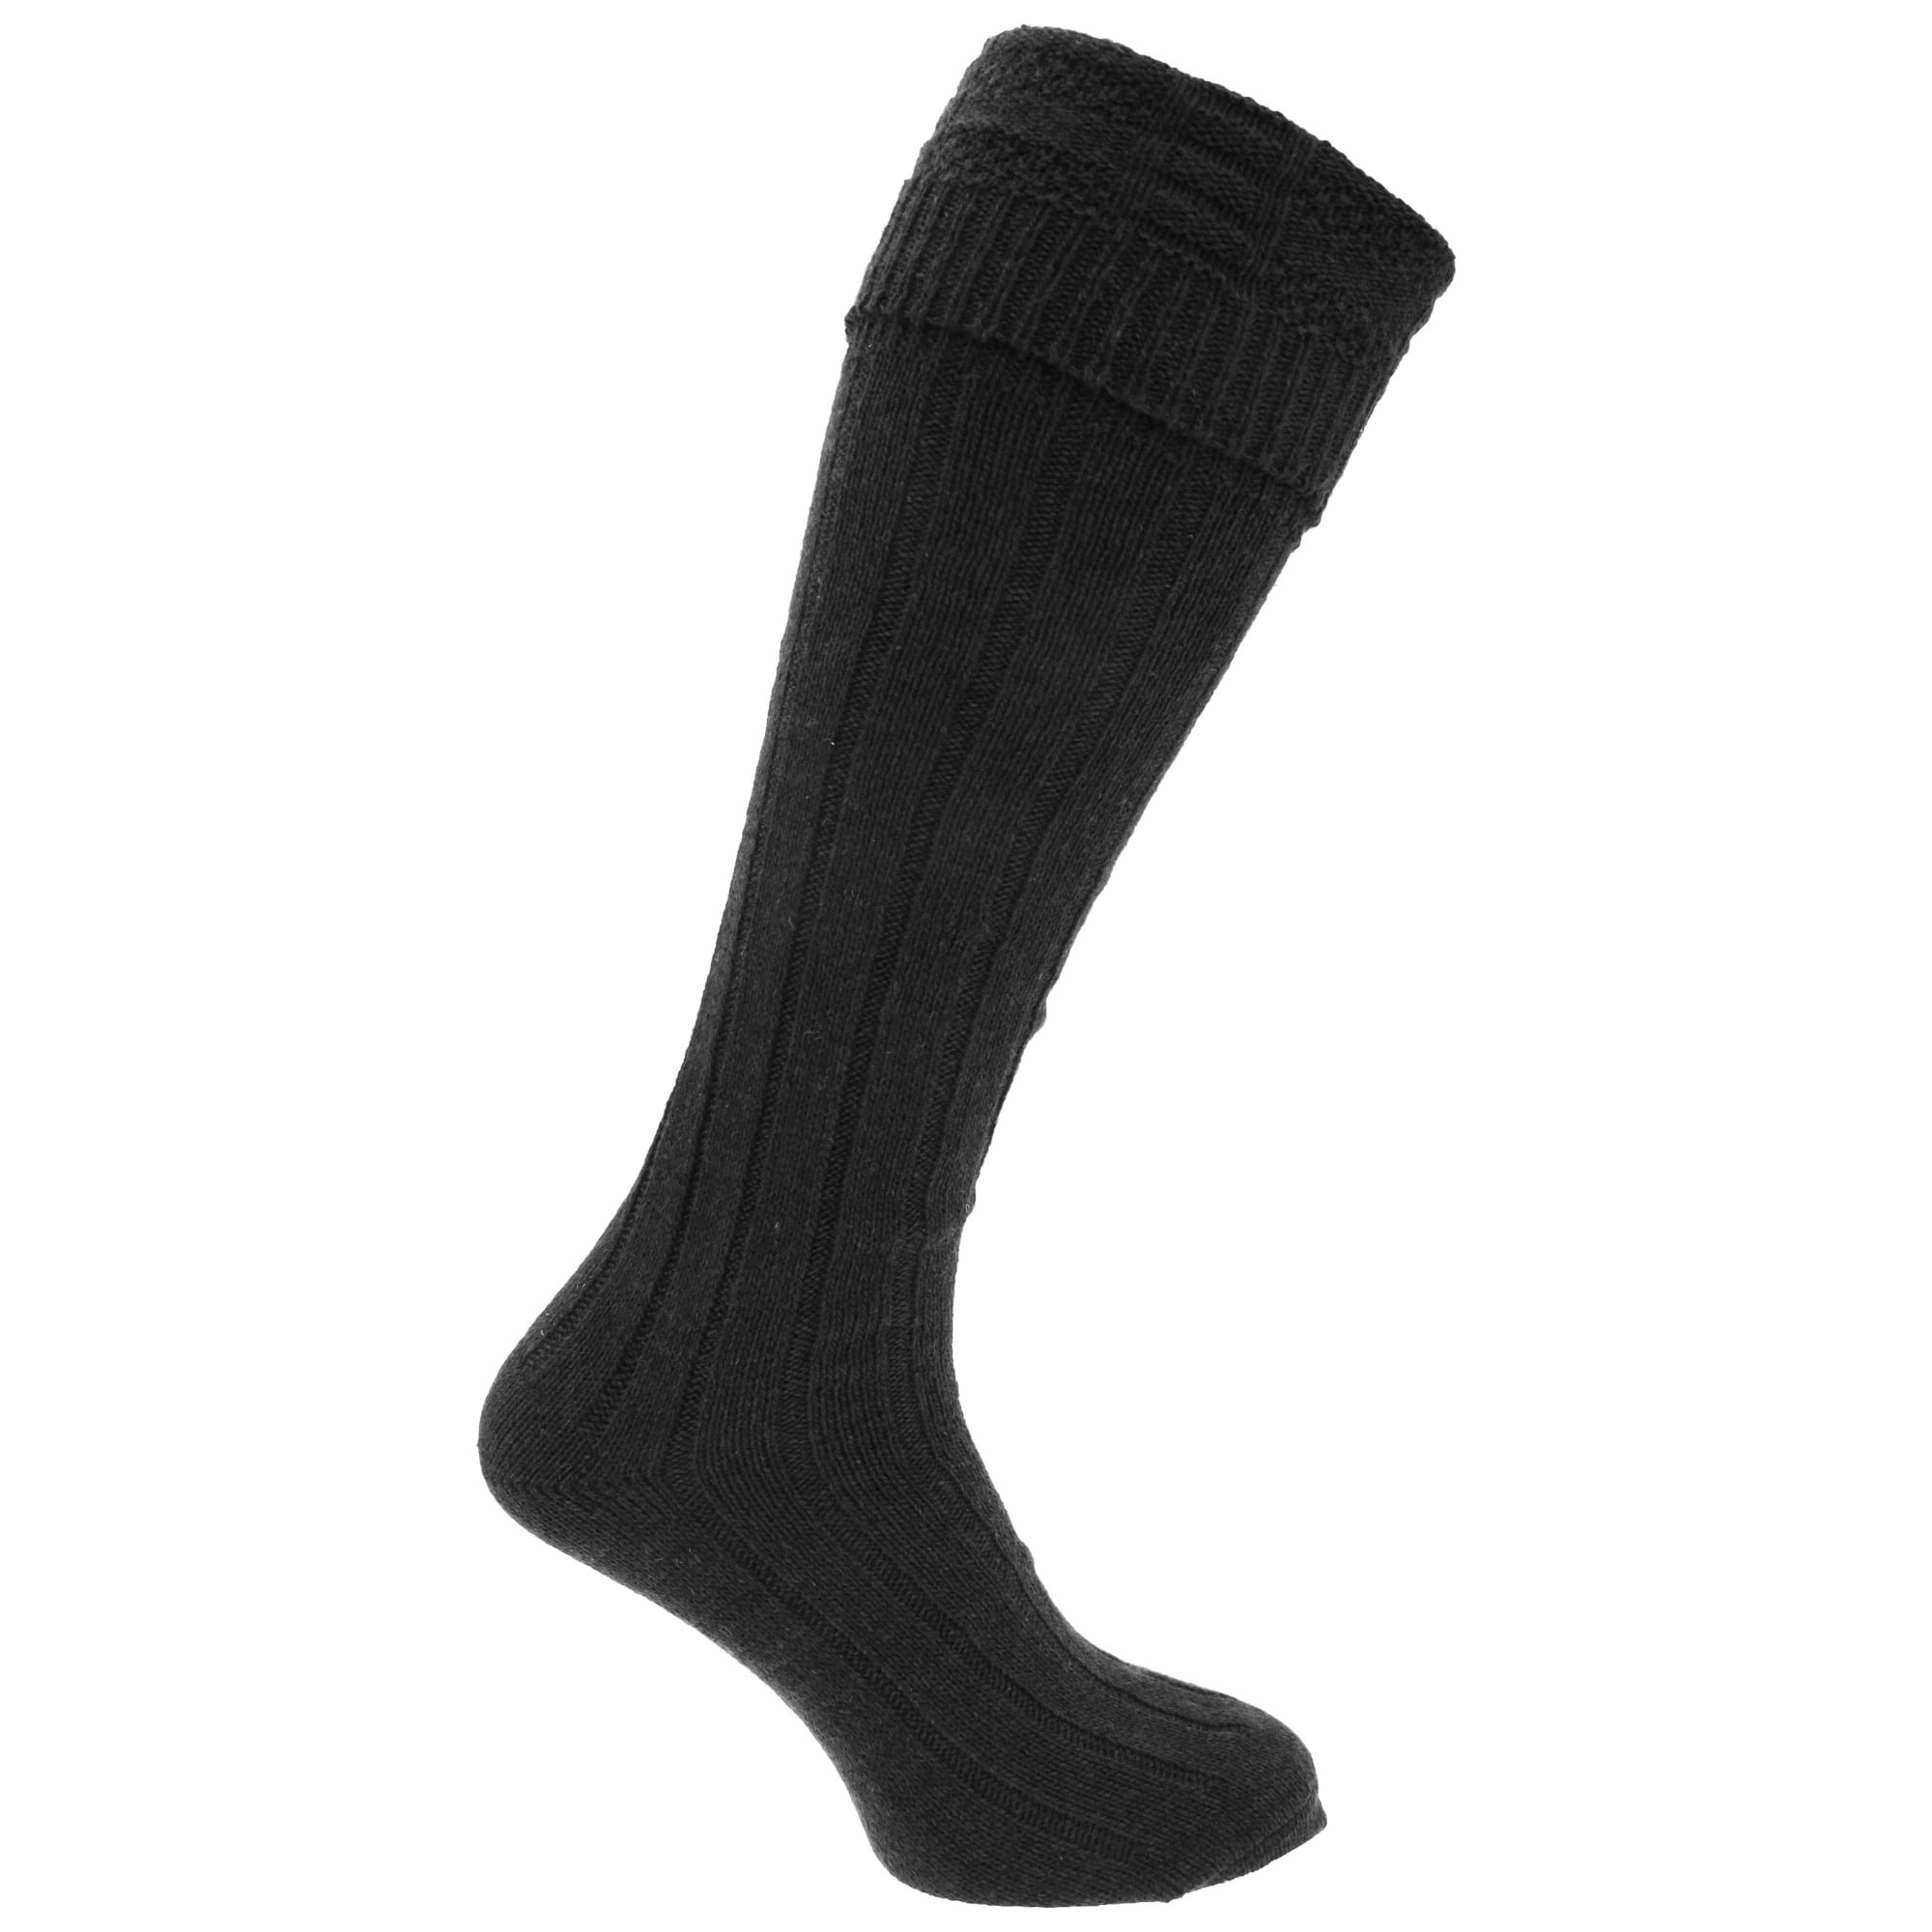 Shoe size 9-11 Black Wool Blend Kilt Hose Socks NEW Size Men's Large 